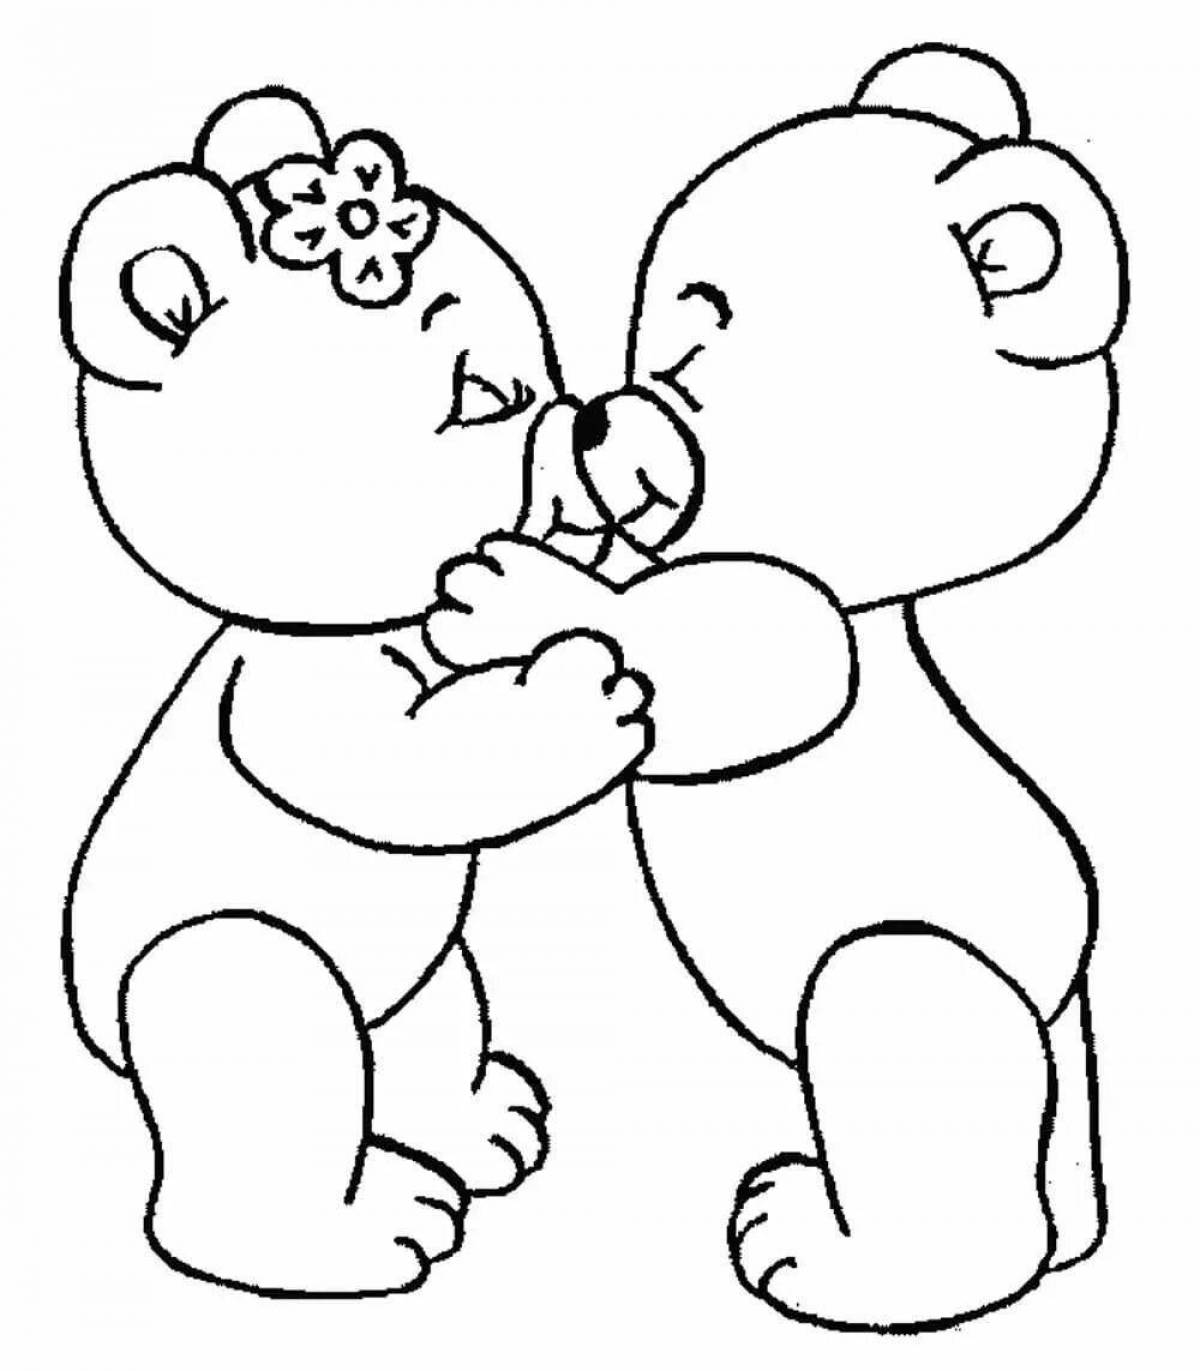 Two greedy bear cubs #3